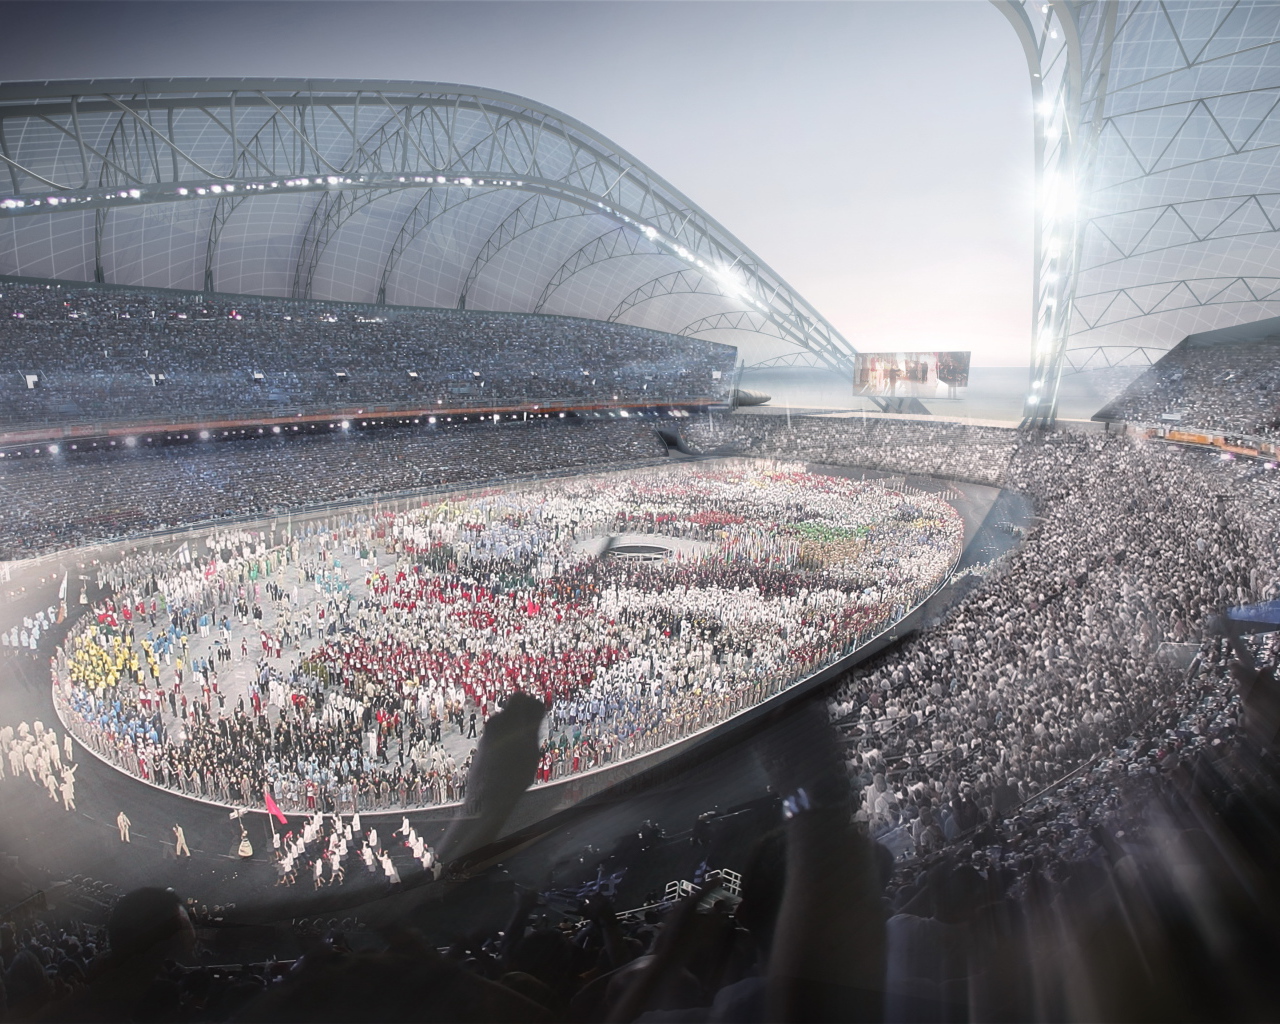 Олимпийский стадион игр в Сочи 2014